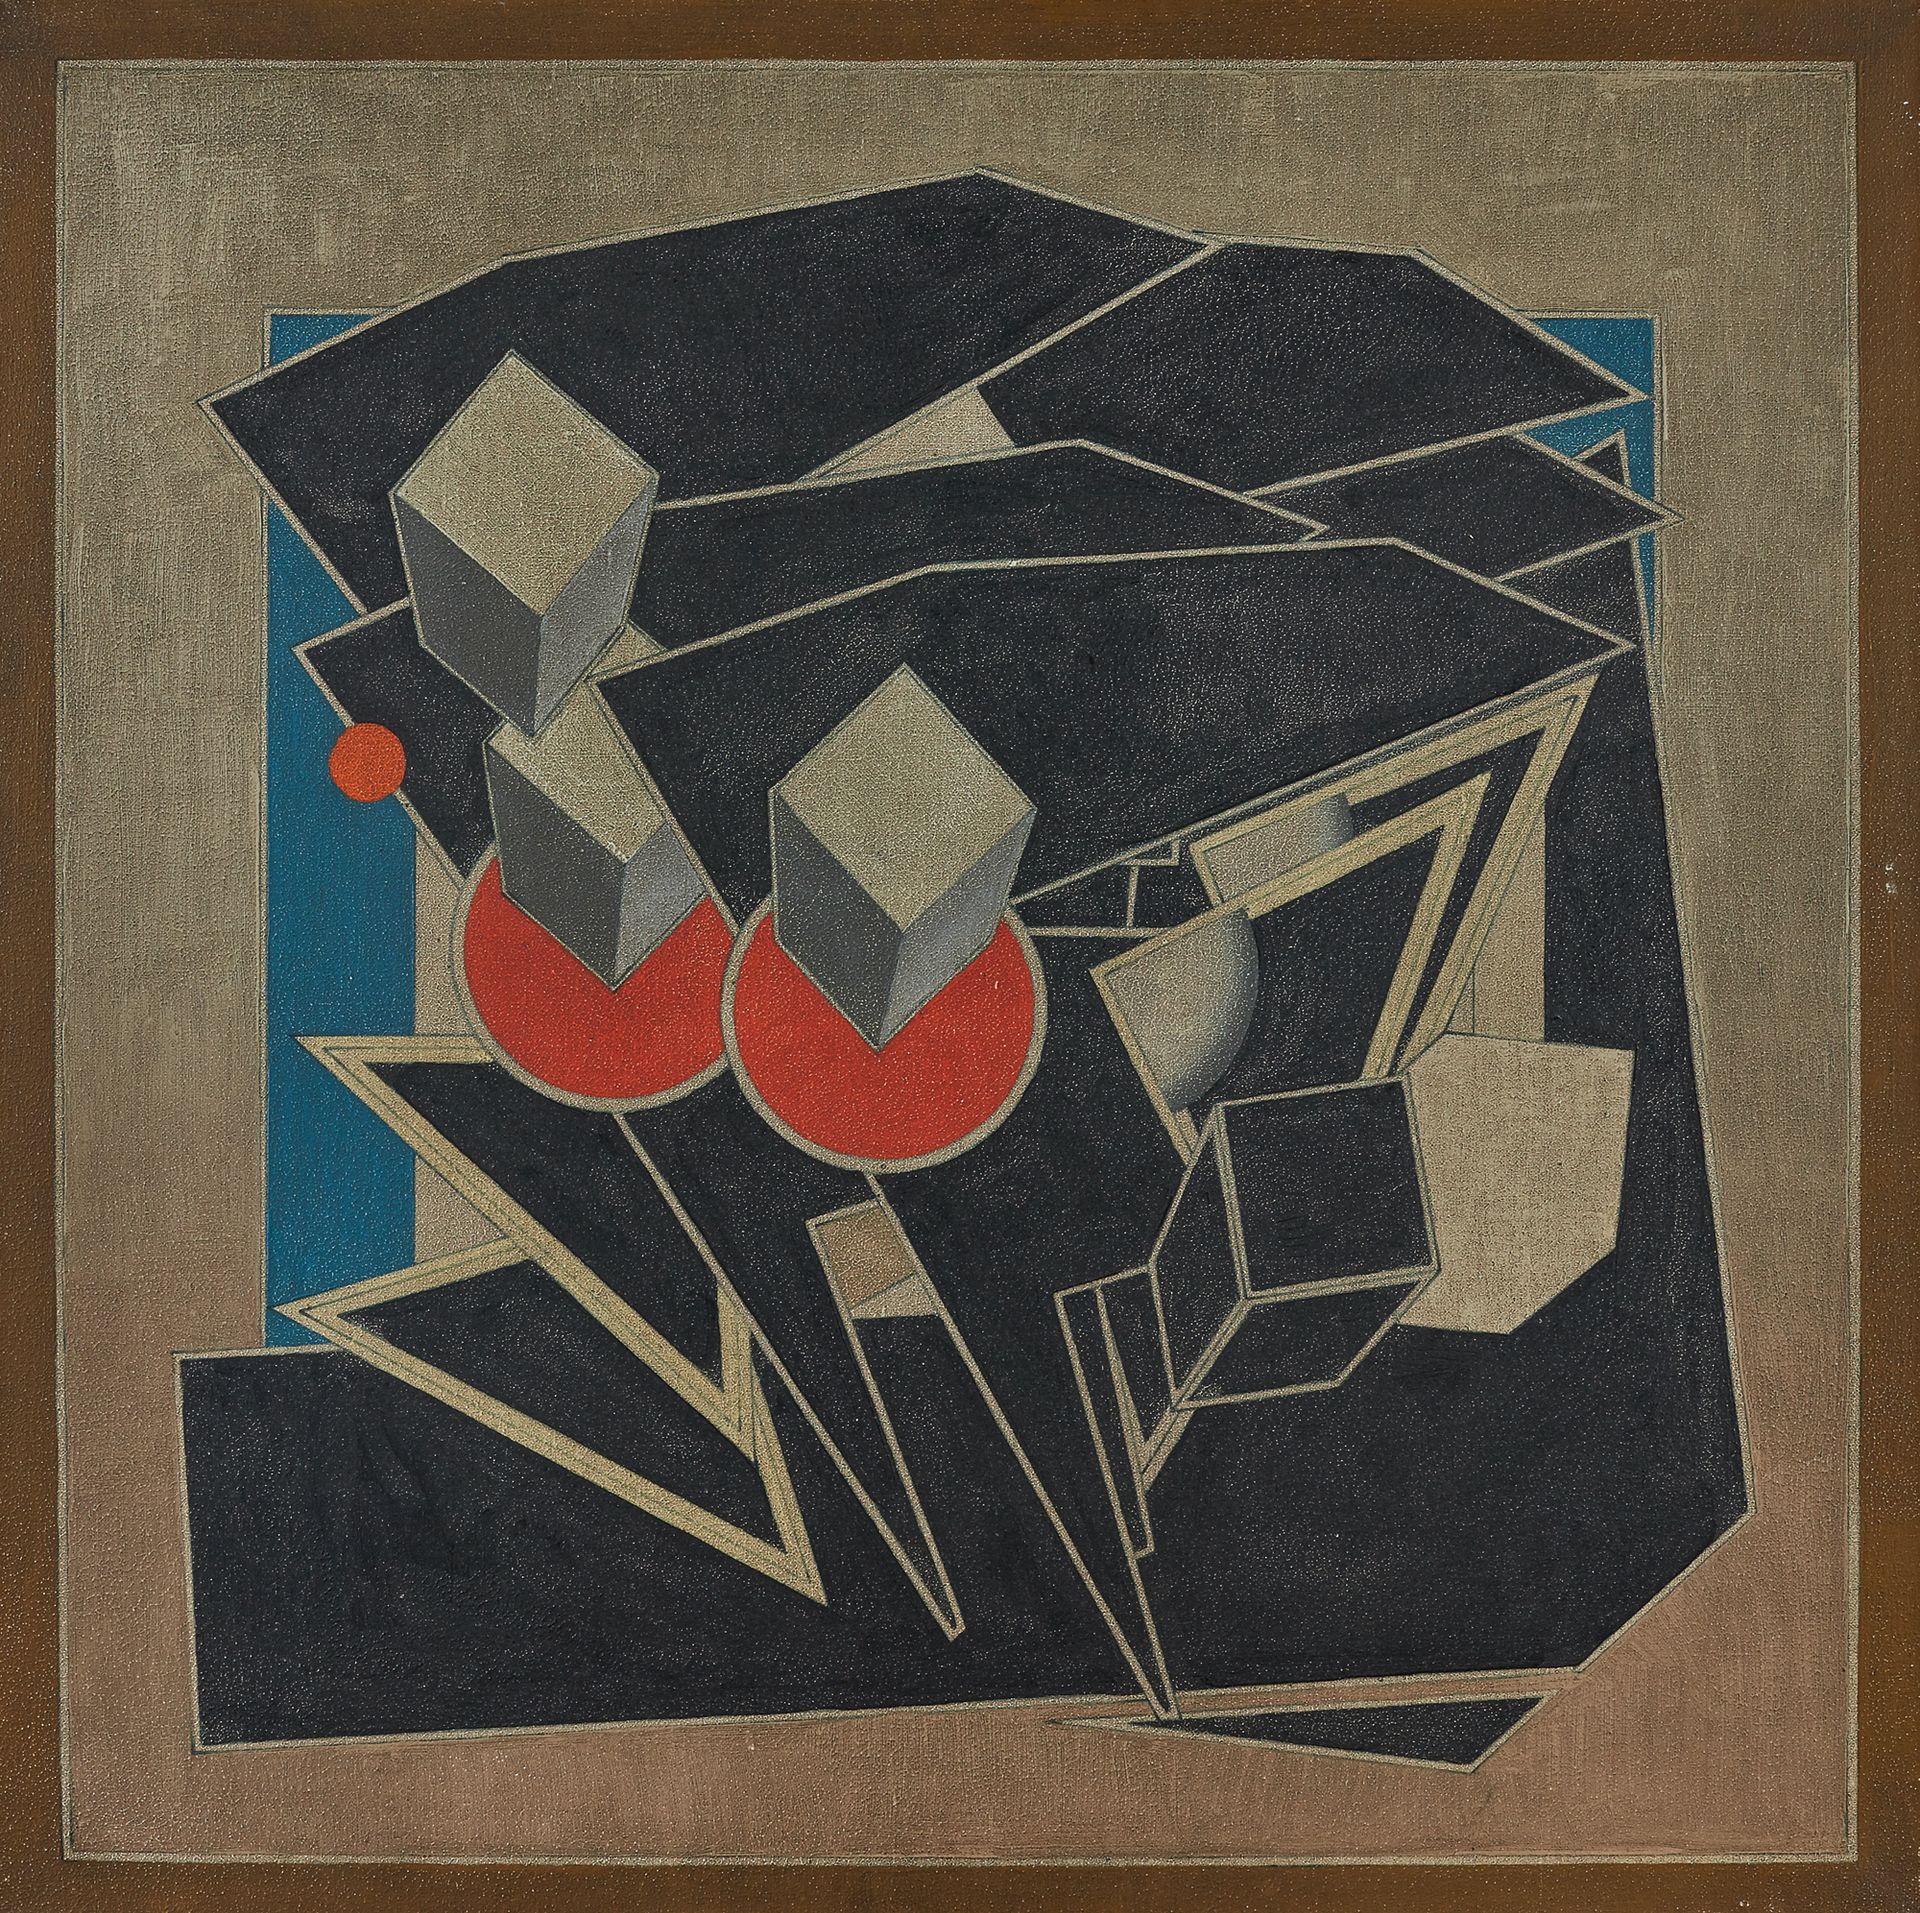 Alain Le YAOUANC (1940) 作文
布面混合媒体，未署名
80 x 80 cm